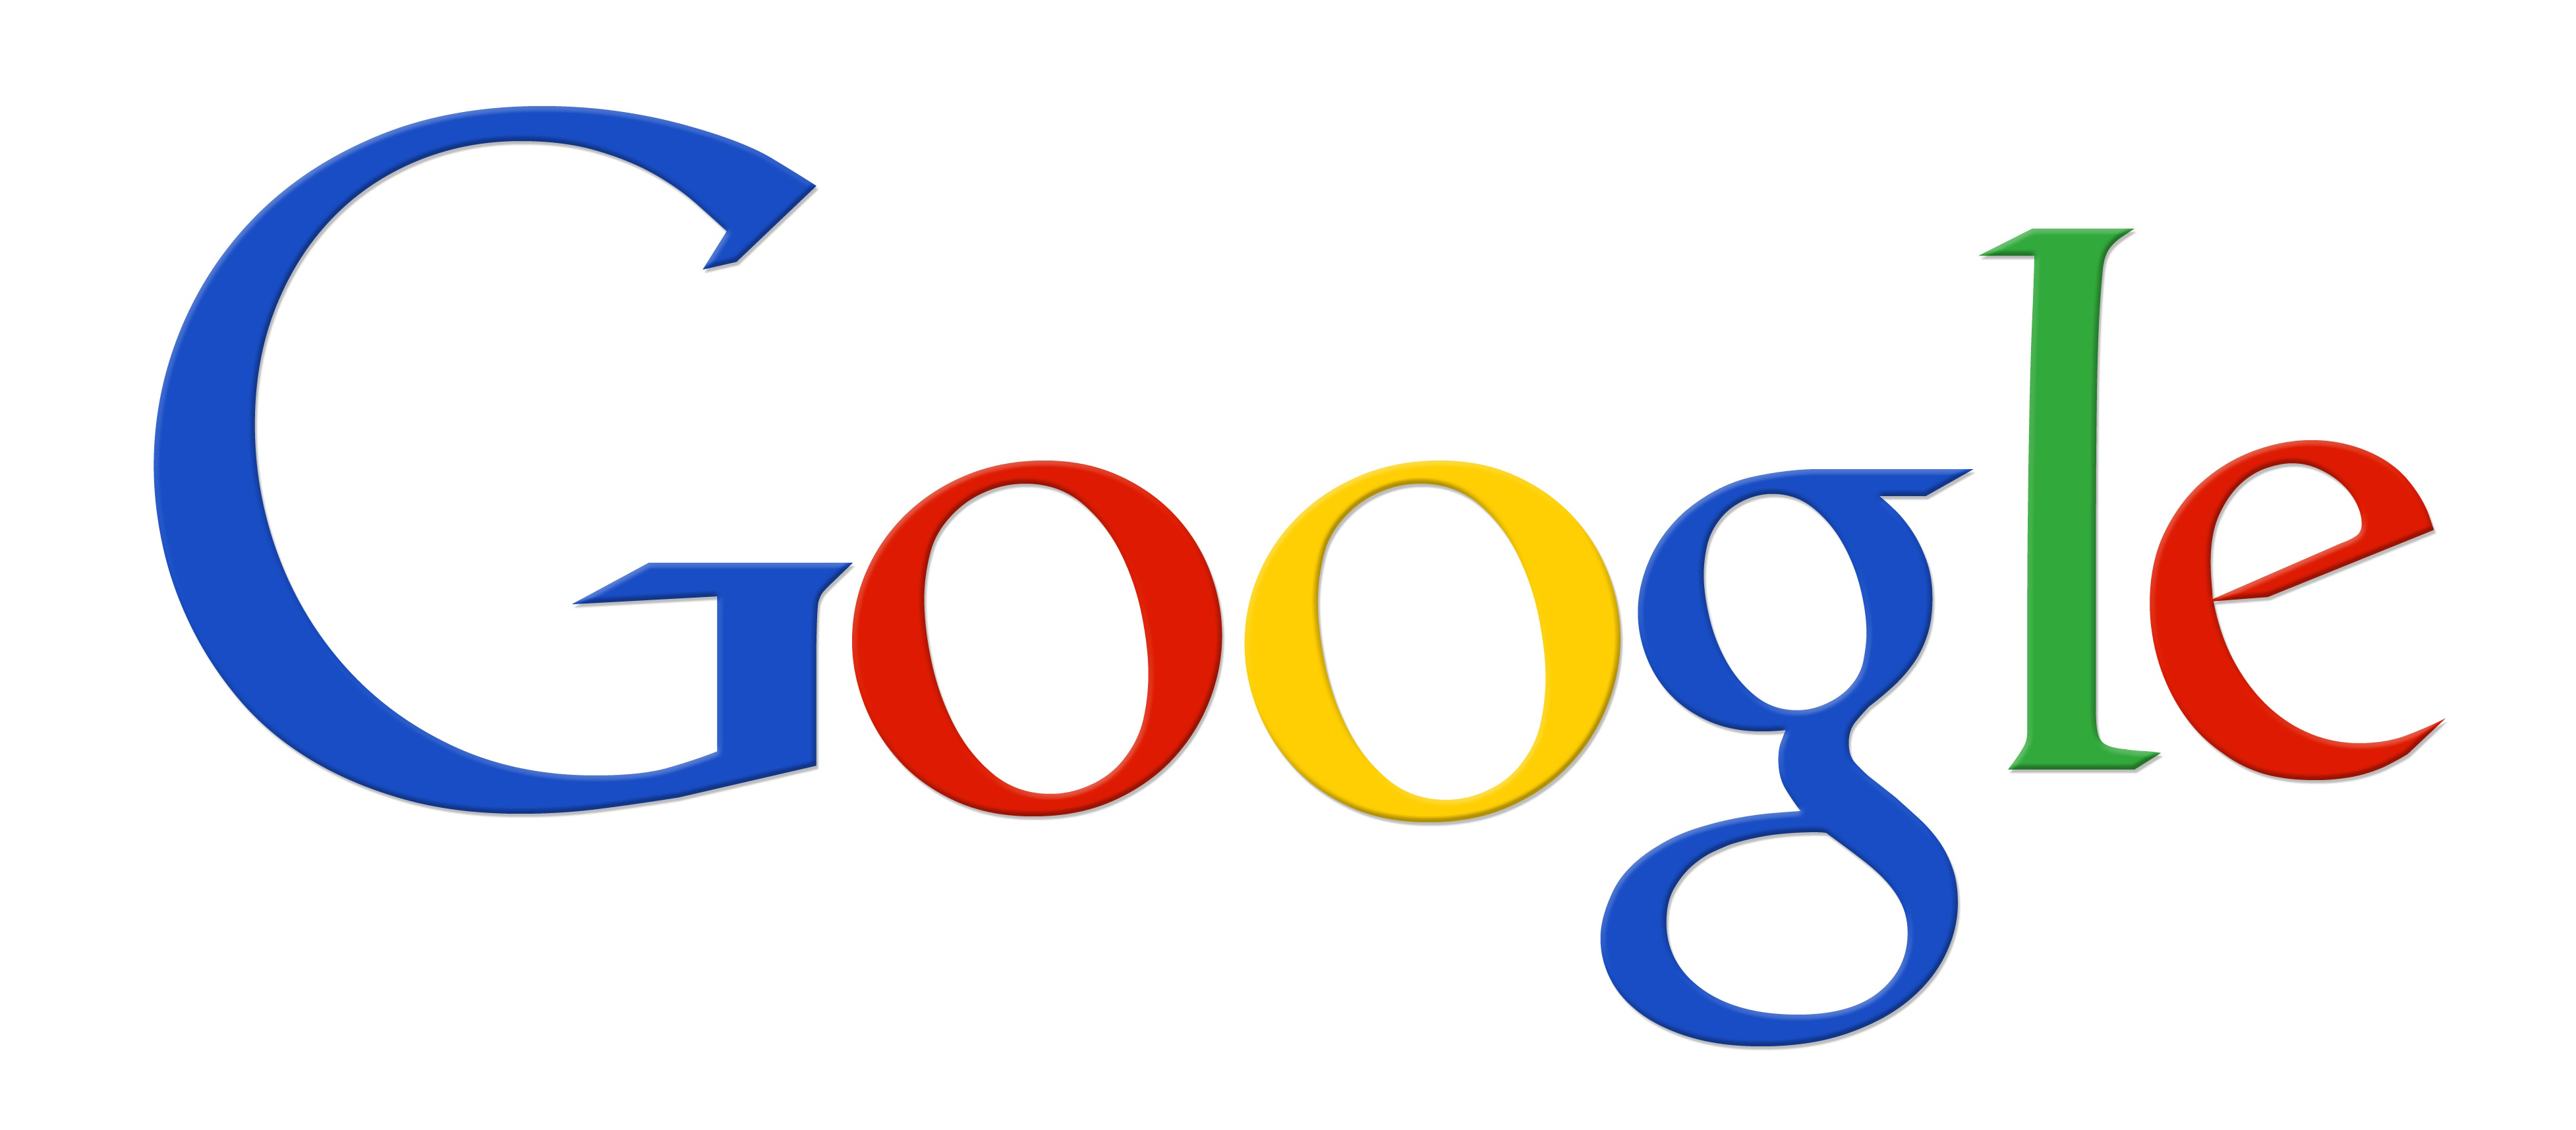 Old-Google-Logo.jpg